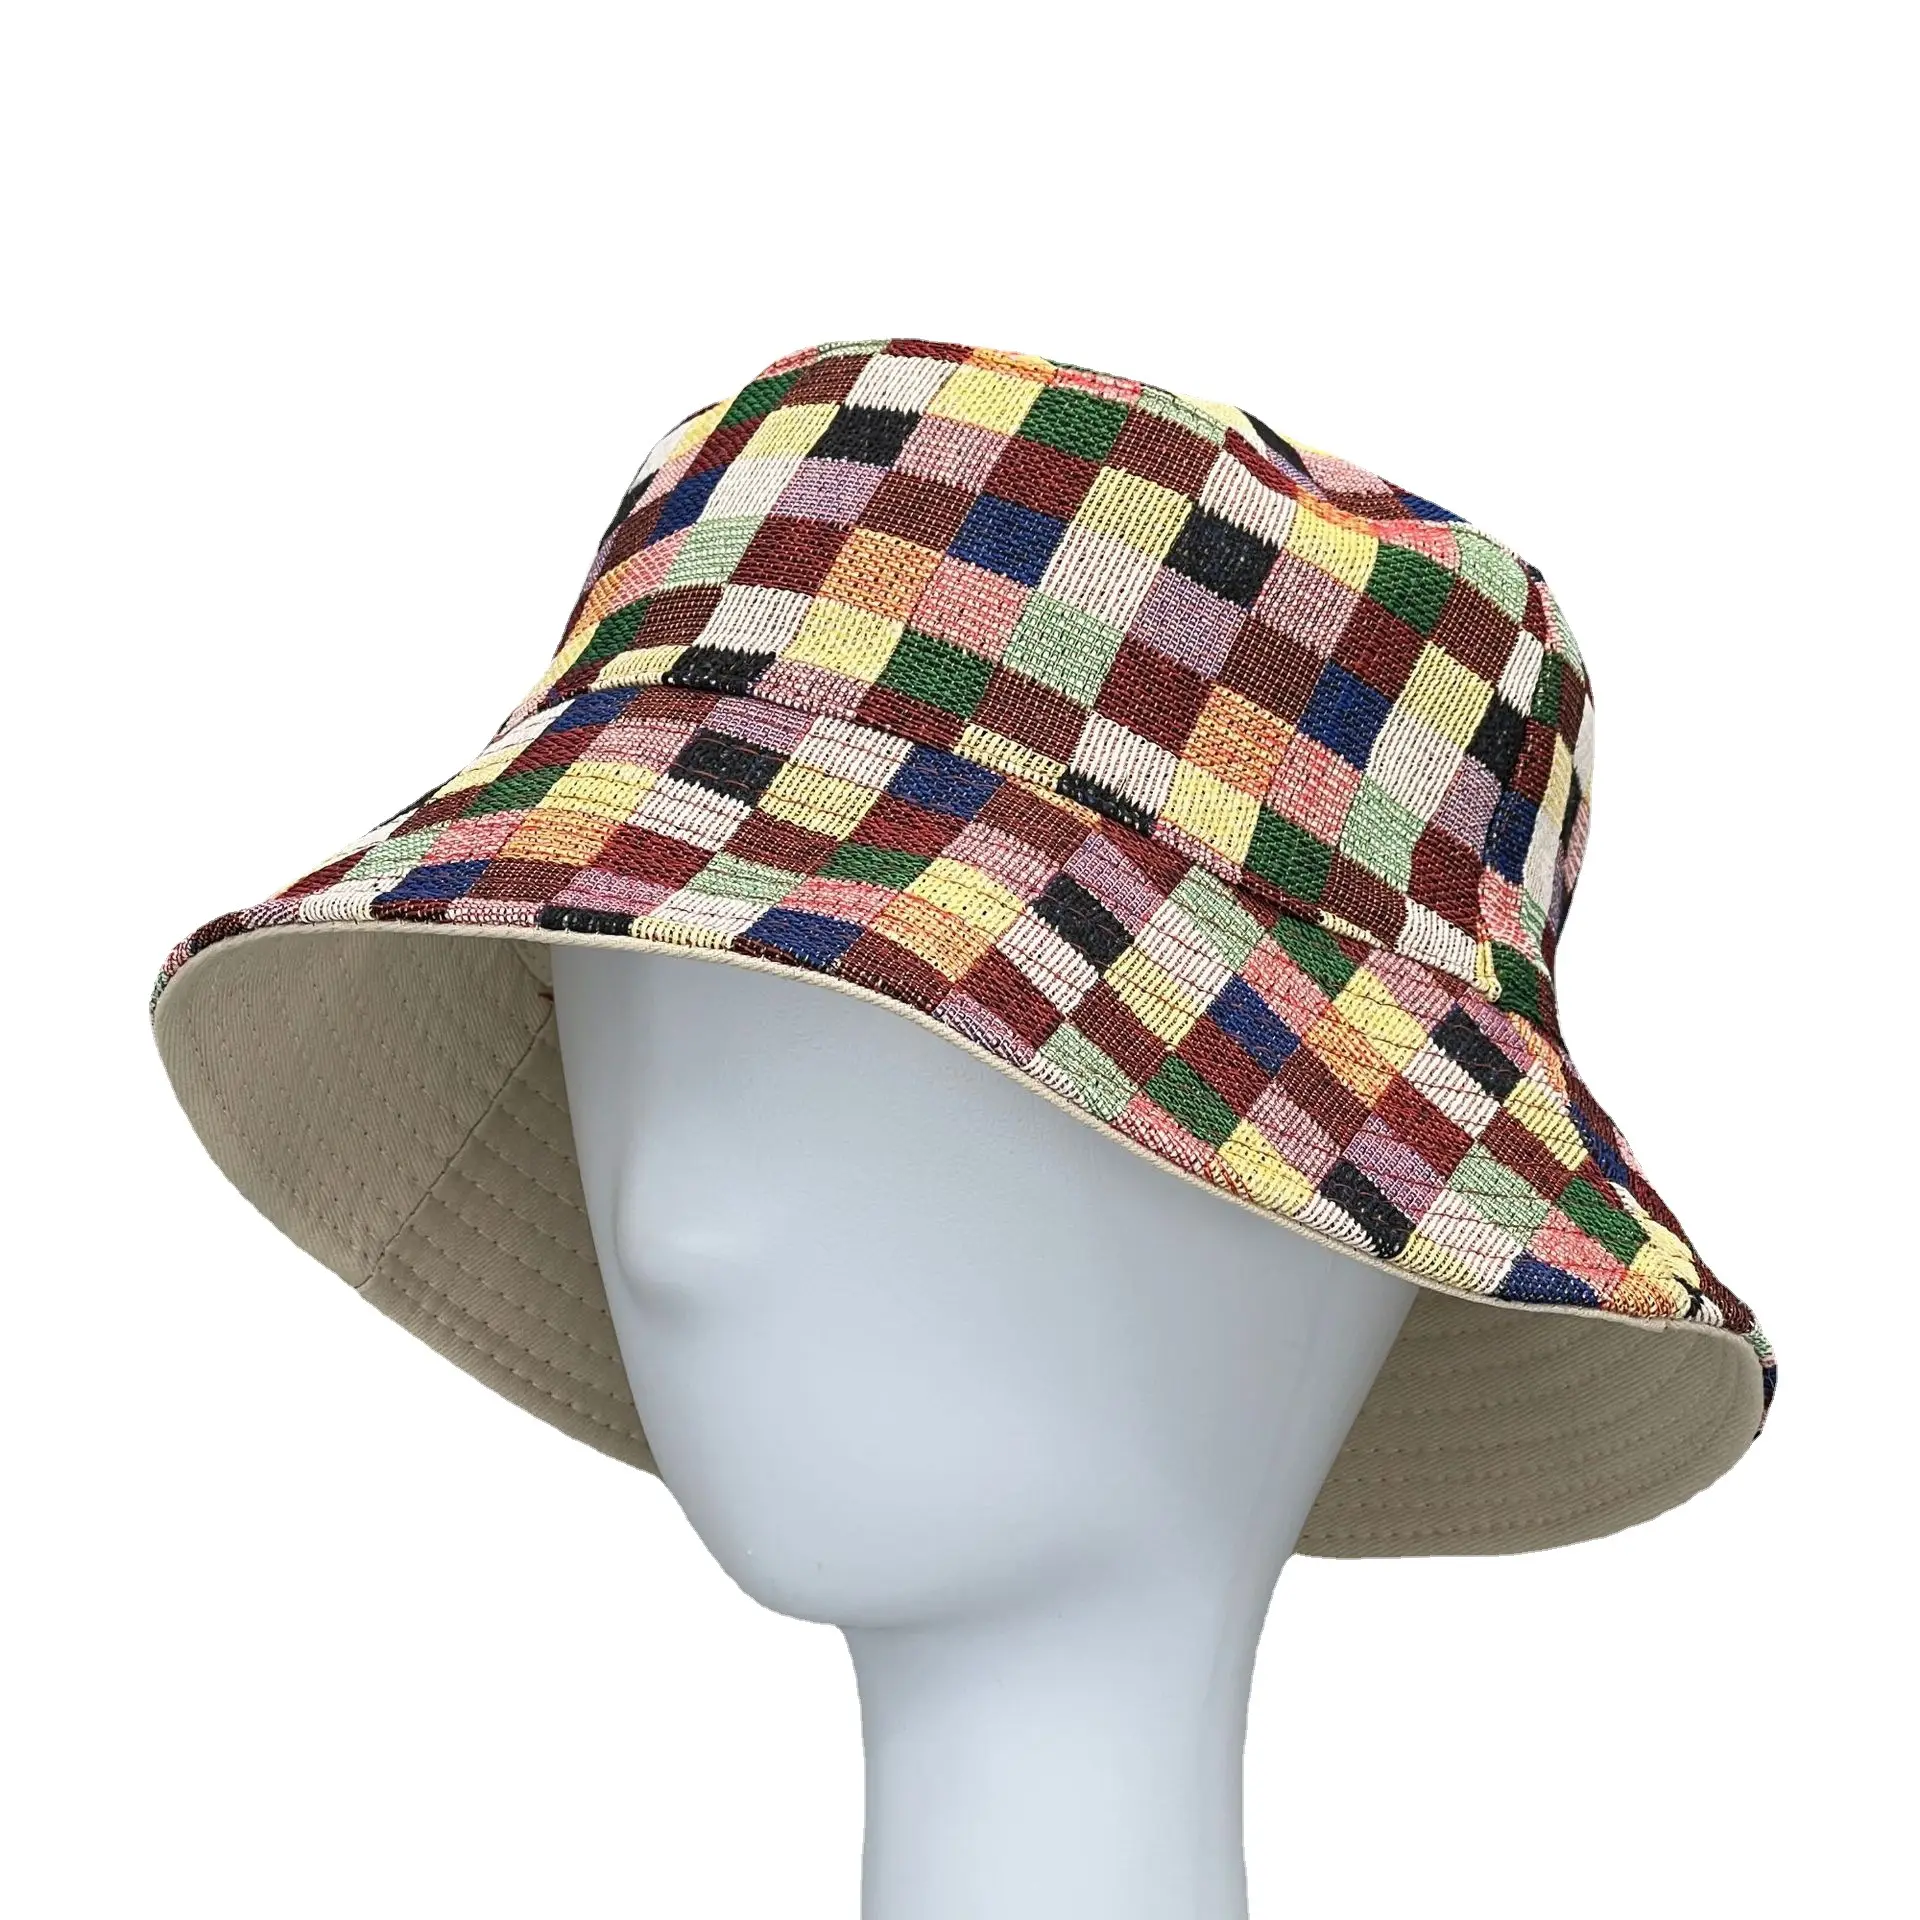 Японская шляпа Fisher весна-осень модная цветная контрастная хлопковая льняная Радужная разноцветная клетчатая однотонная окрашенная шляпа-ведро в клетку